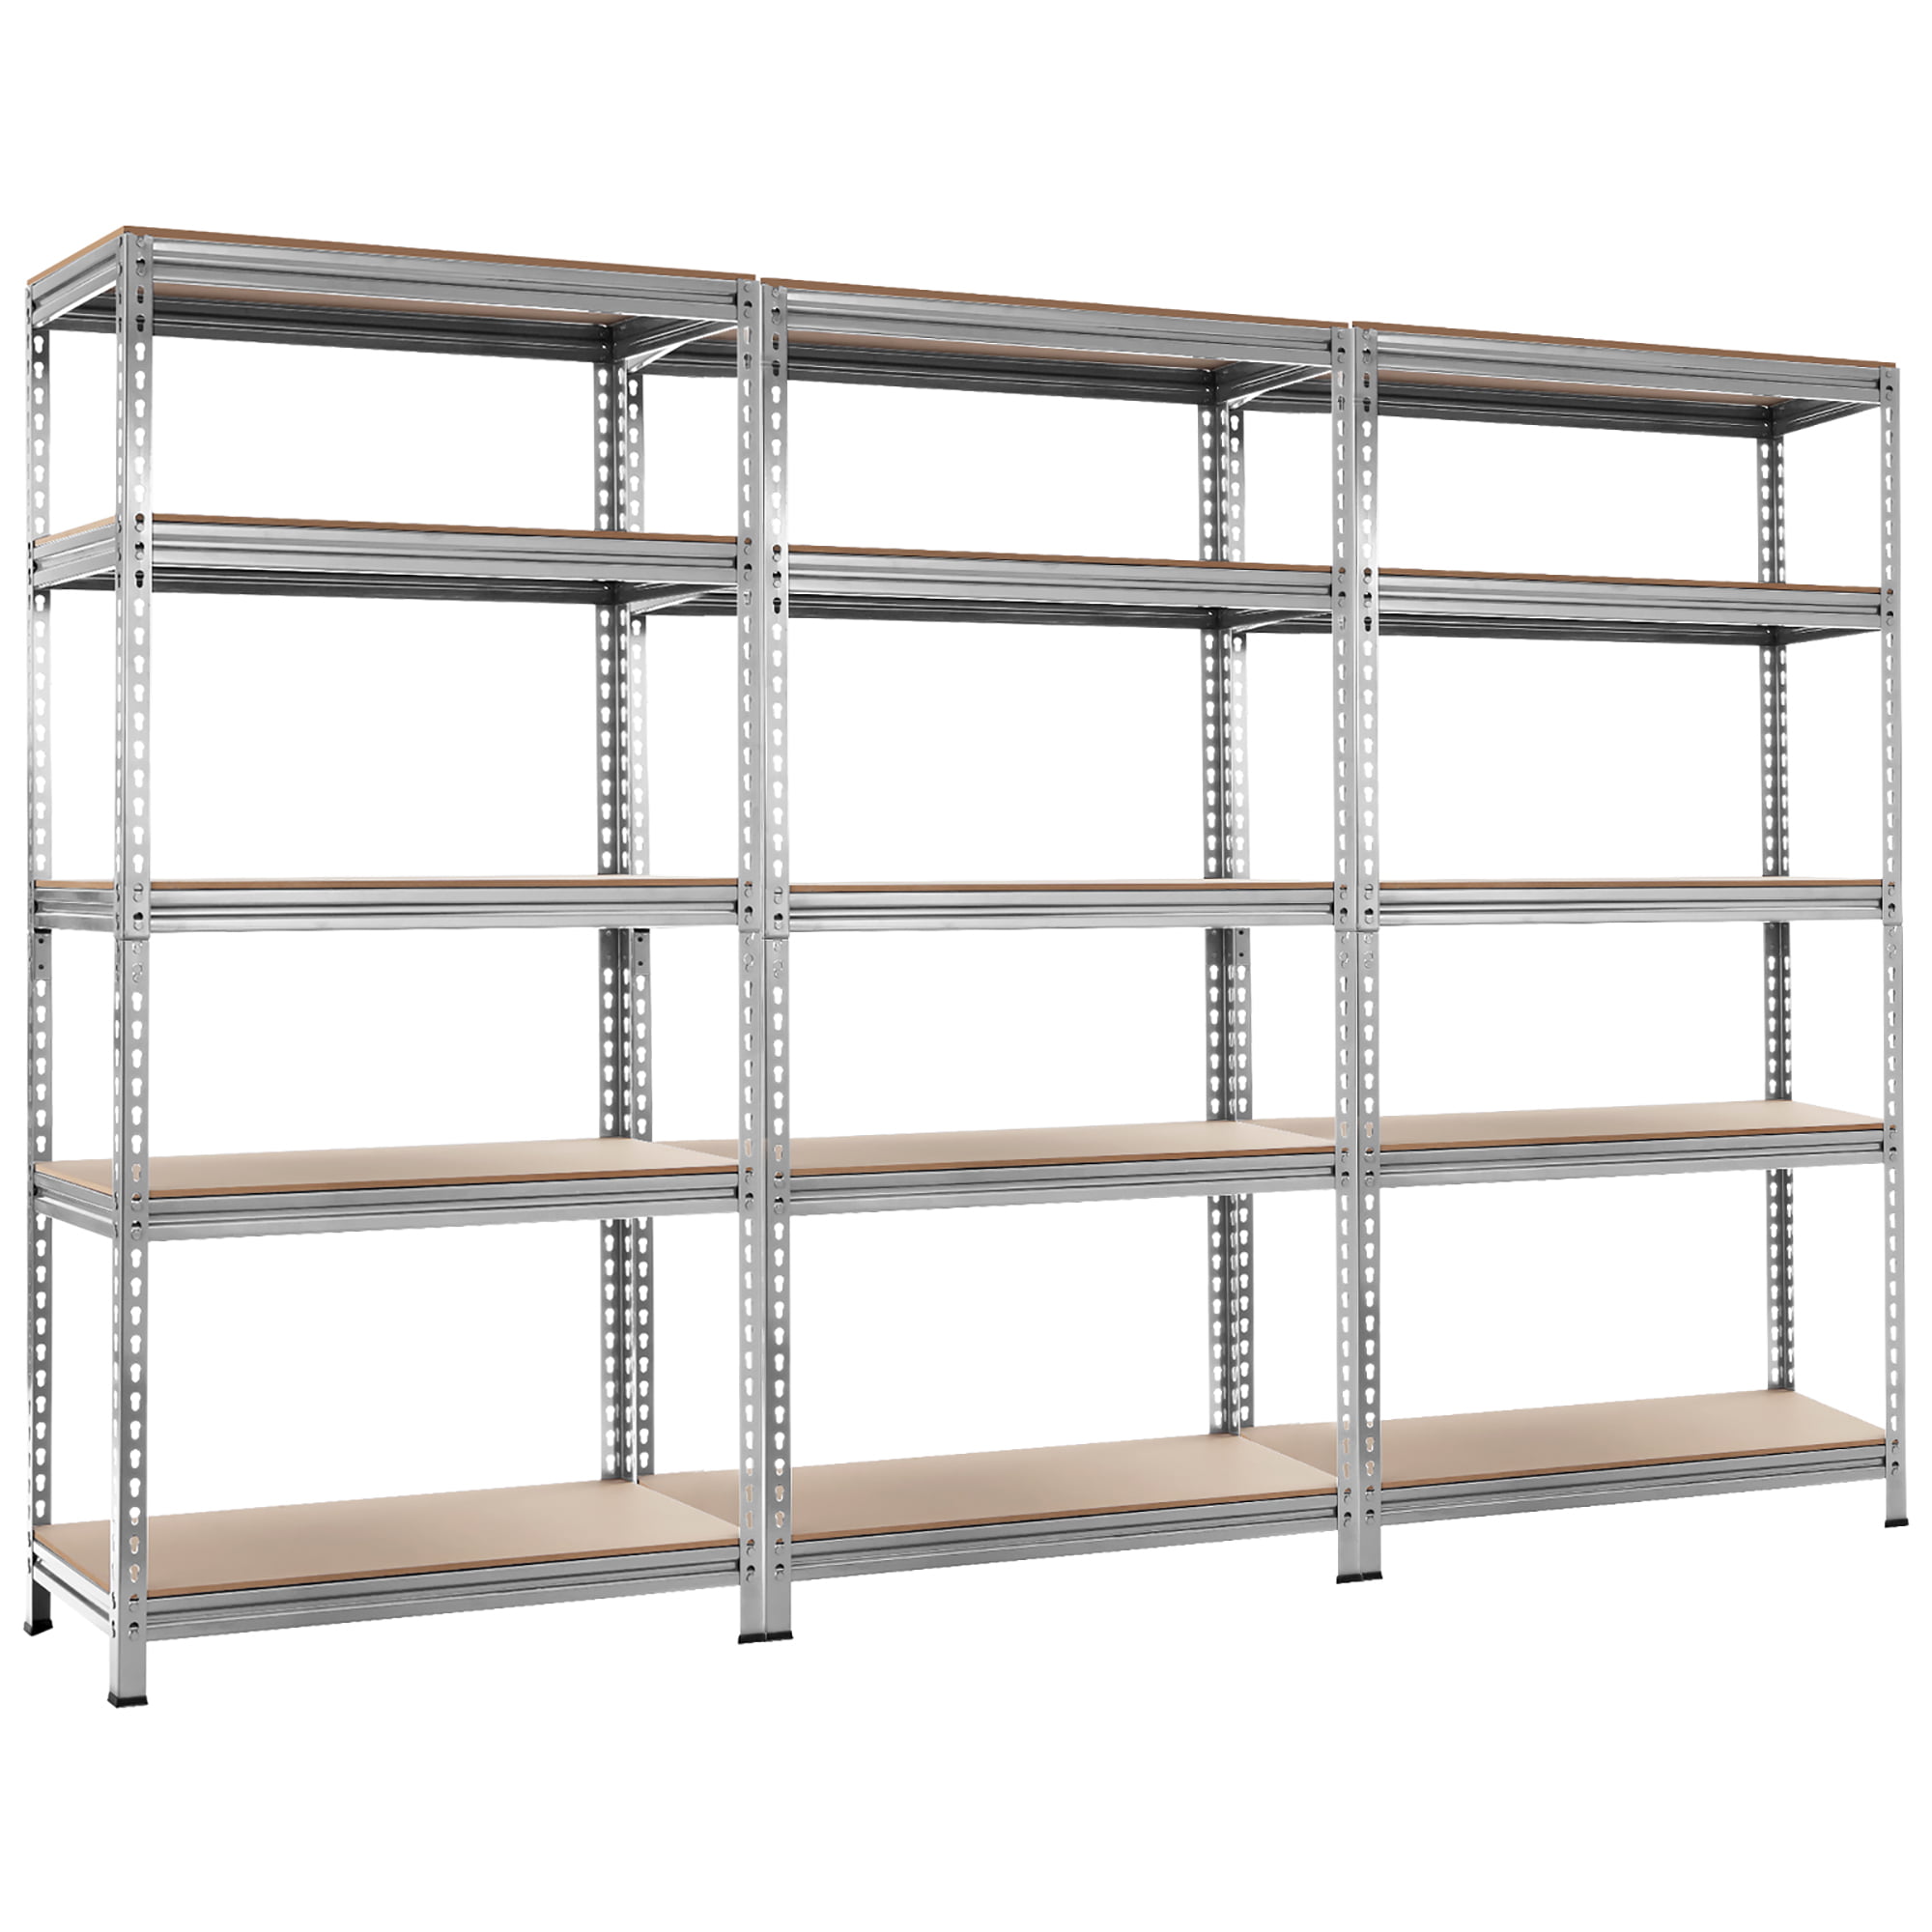 3 x Metal Racking BaysFreestanding/Garage Shelving/Heavy Duty Storage Rack 